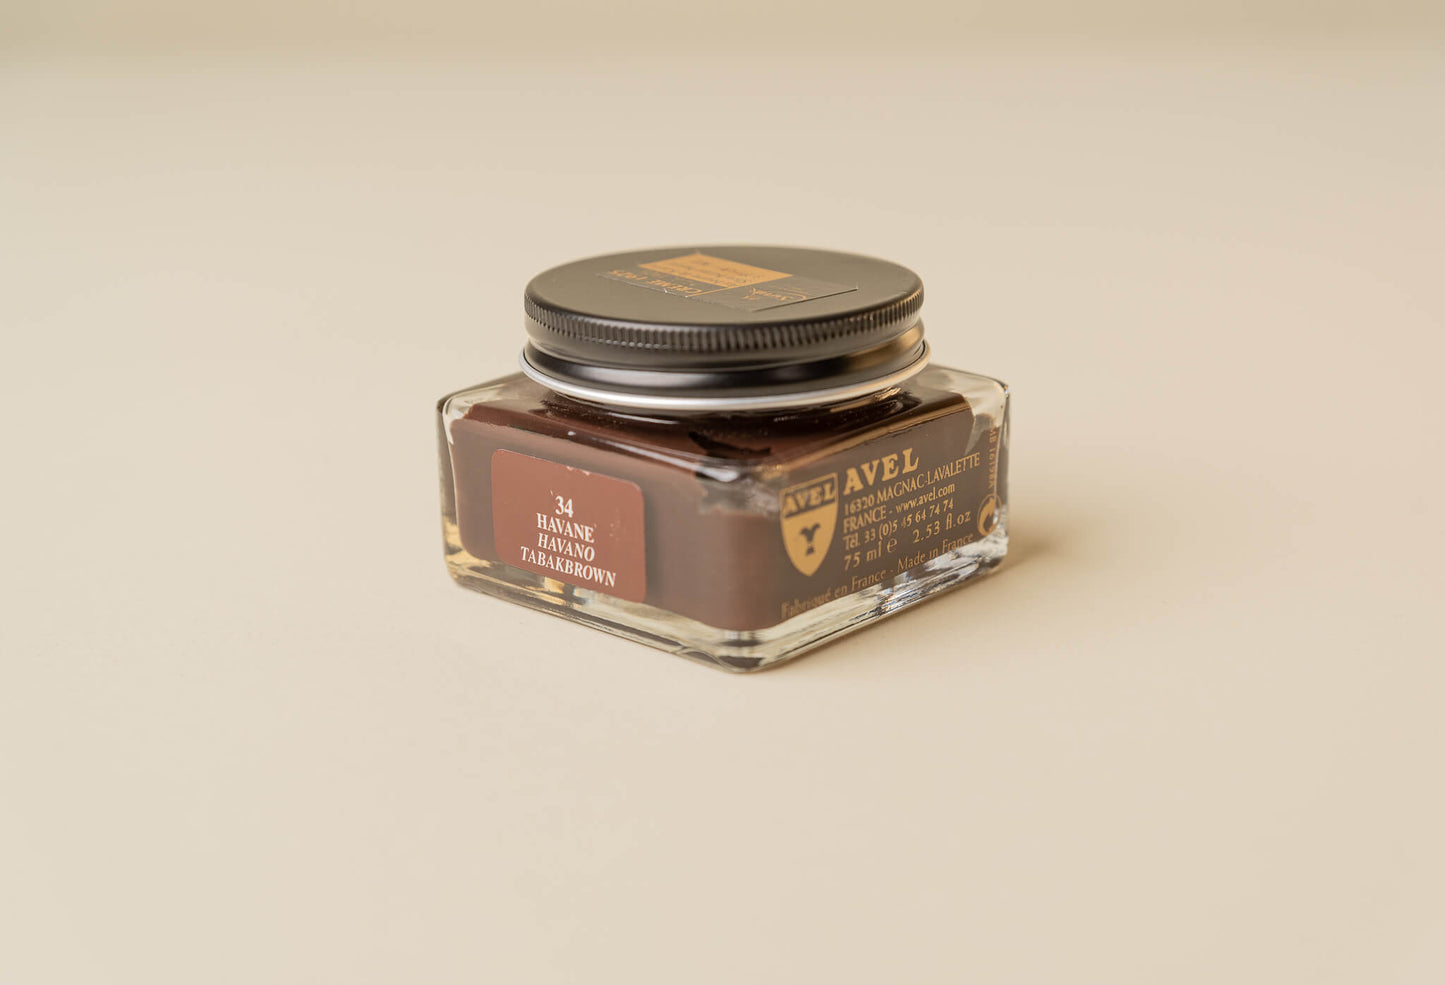 Saphir Medaille d'or Pommaider 1925 cream polish Havane / tobacco 34